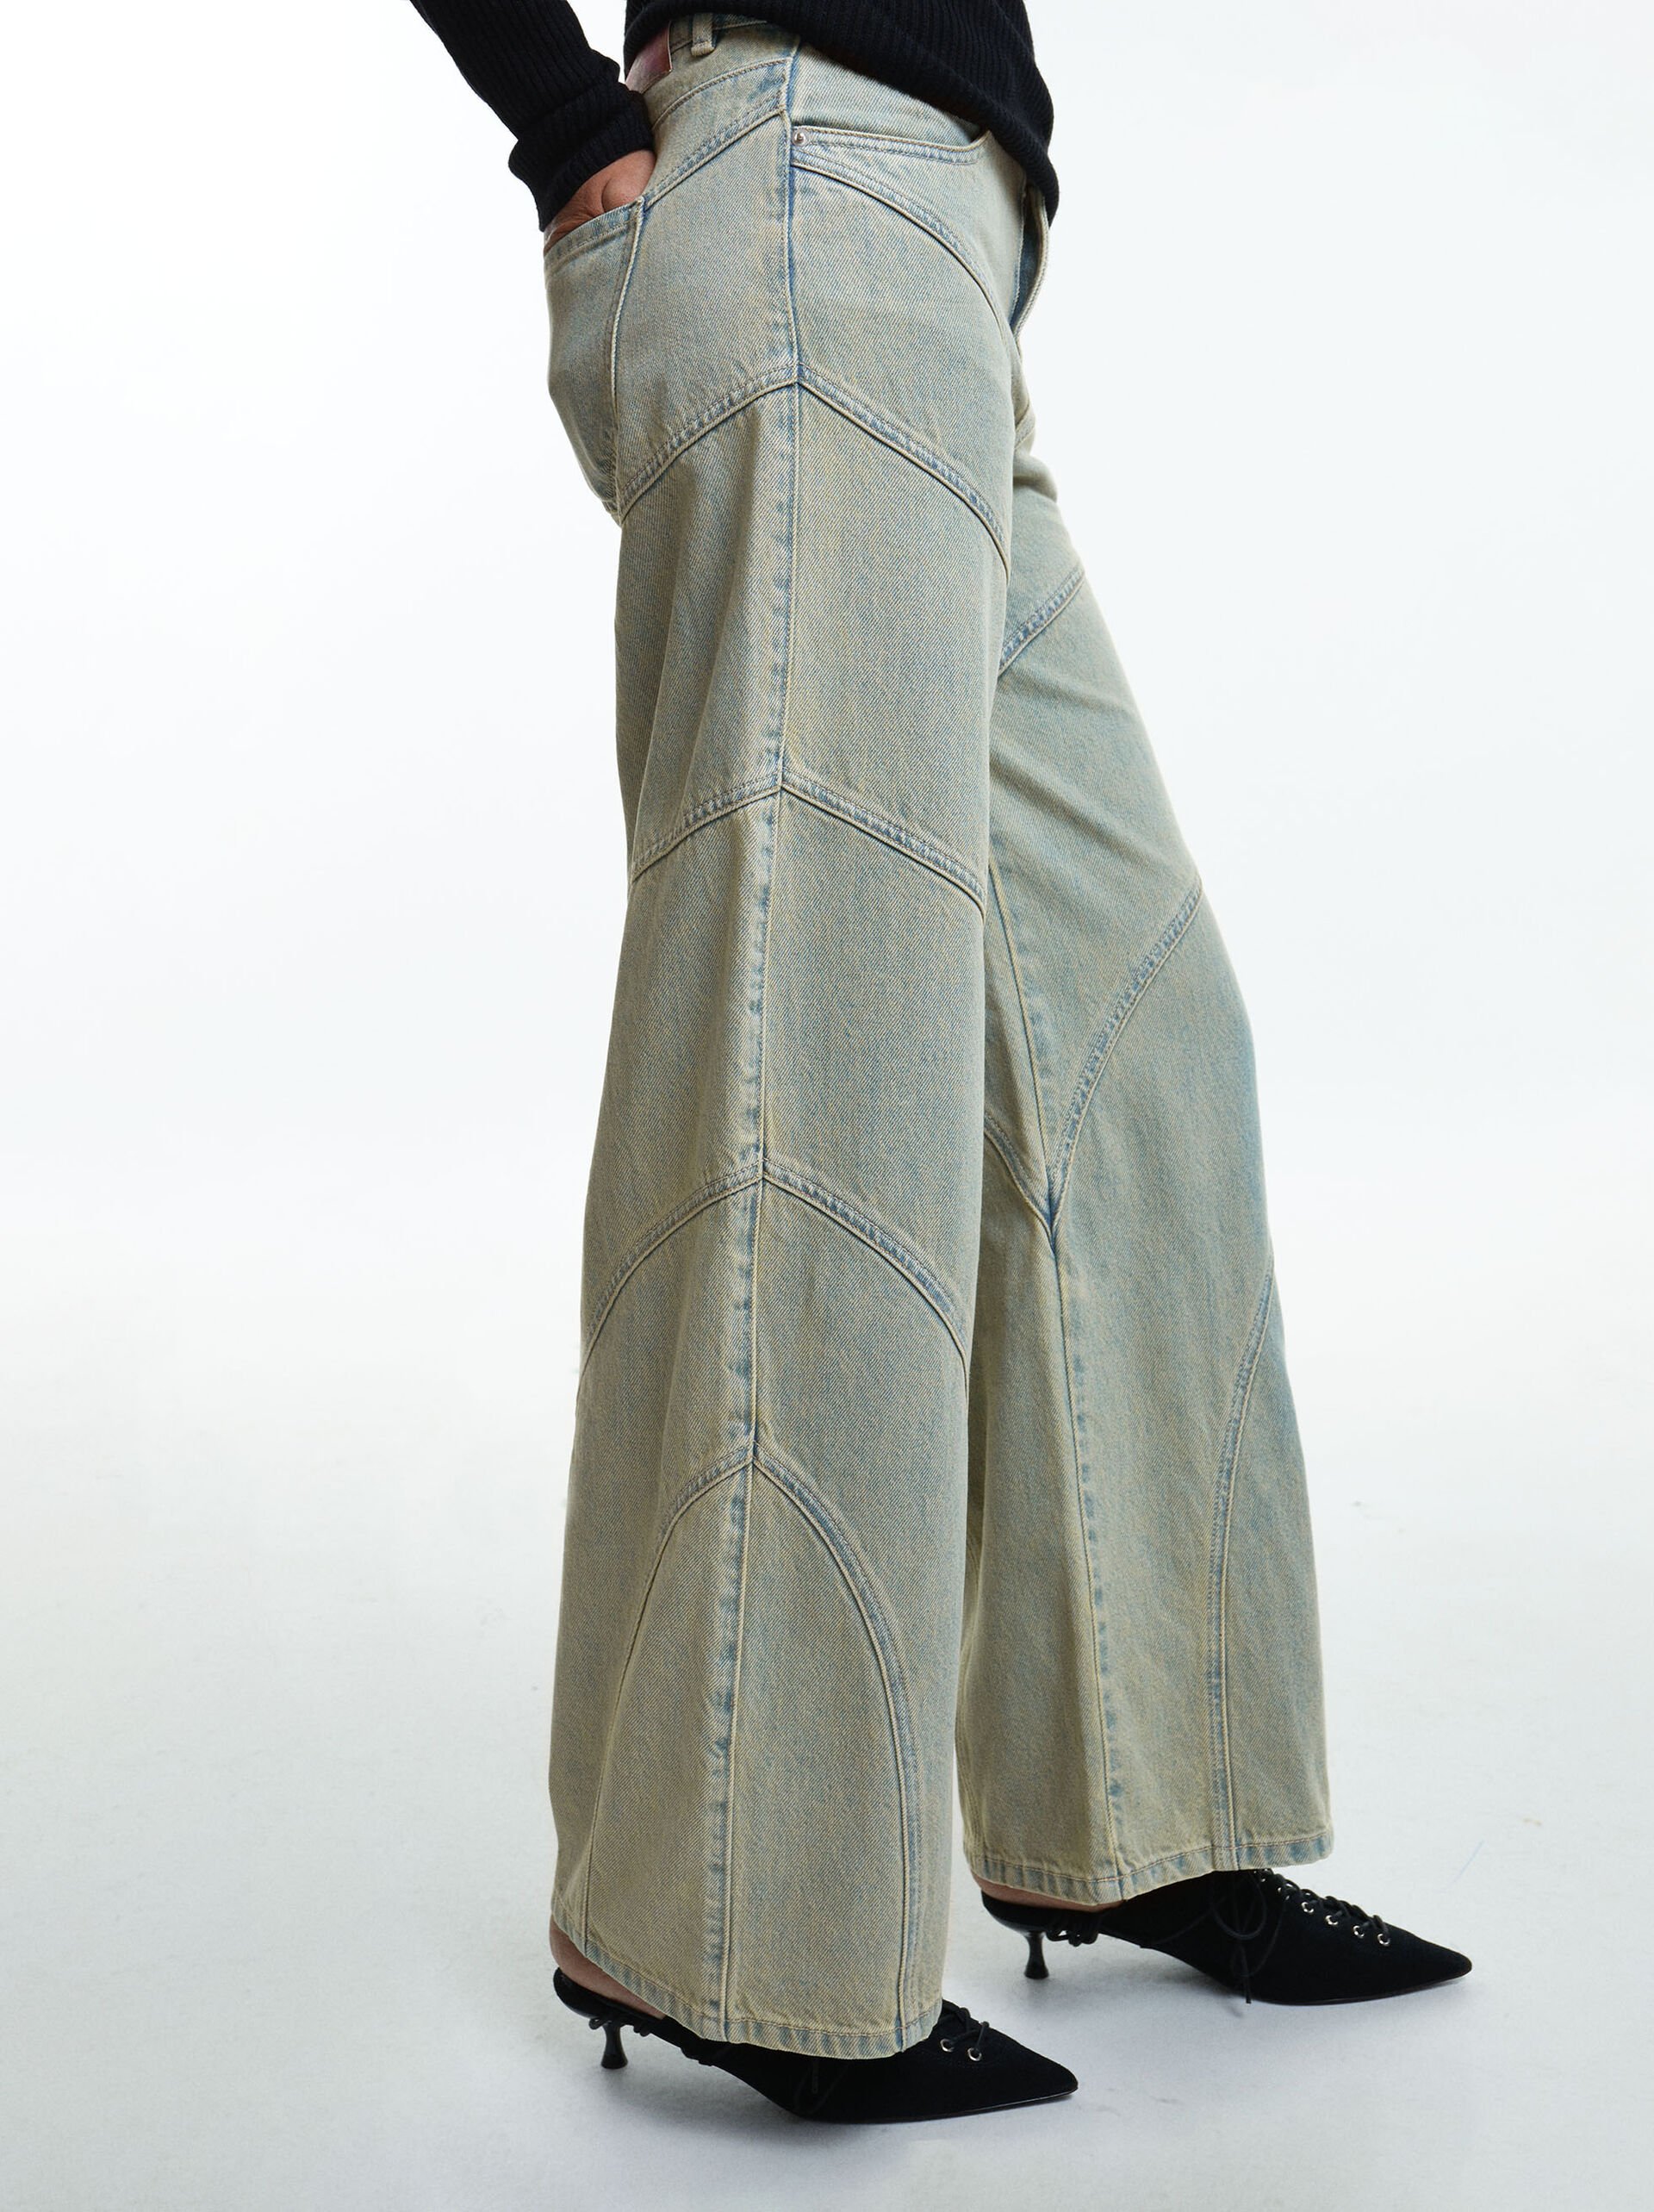 Jean Taille Mi-Haute image number 3.0